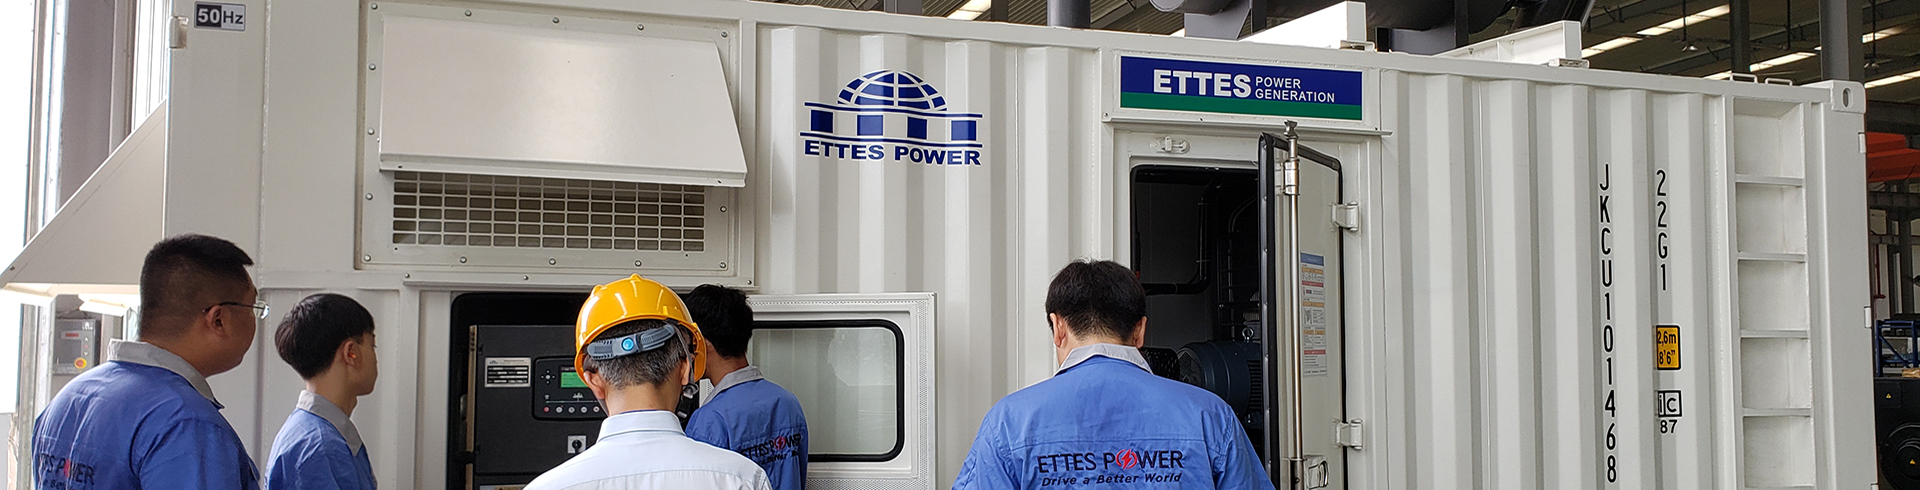 Ettespower manufature producer gas engine generators & CHPs Ettes Power Group Cummins MAN MWM (13)